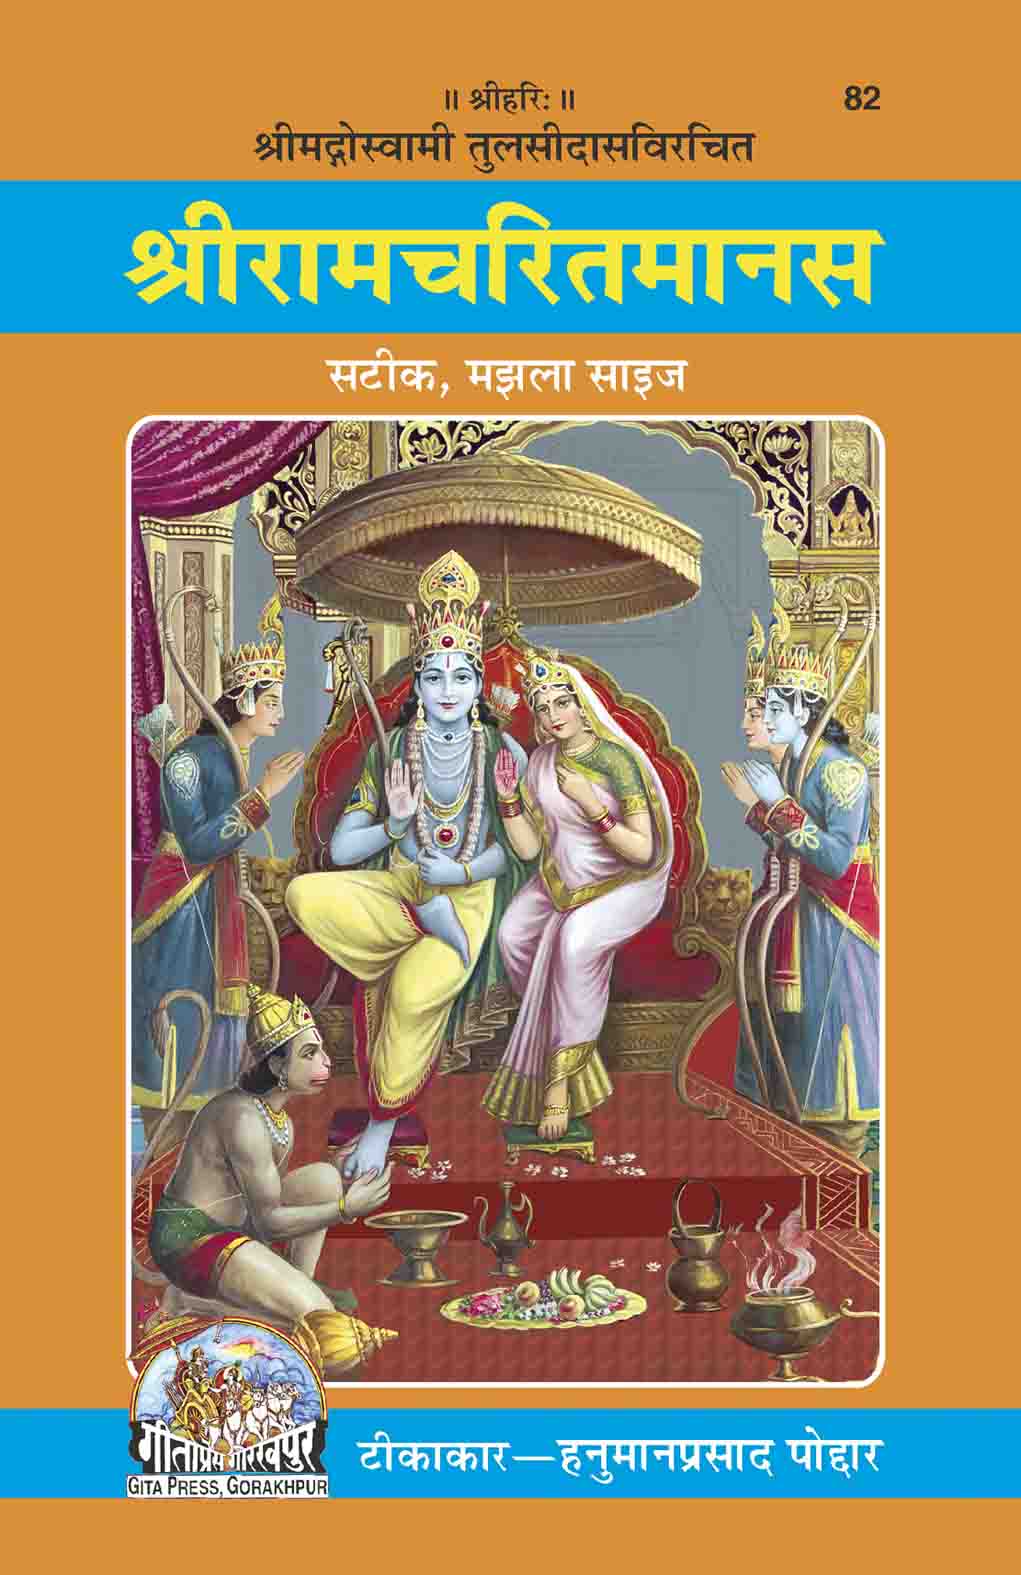 Shri Ramacharitamanas Majhla Satik by Gita Press